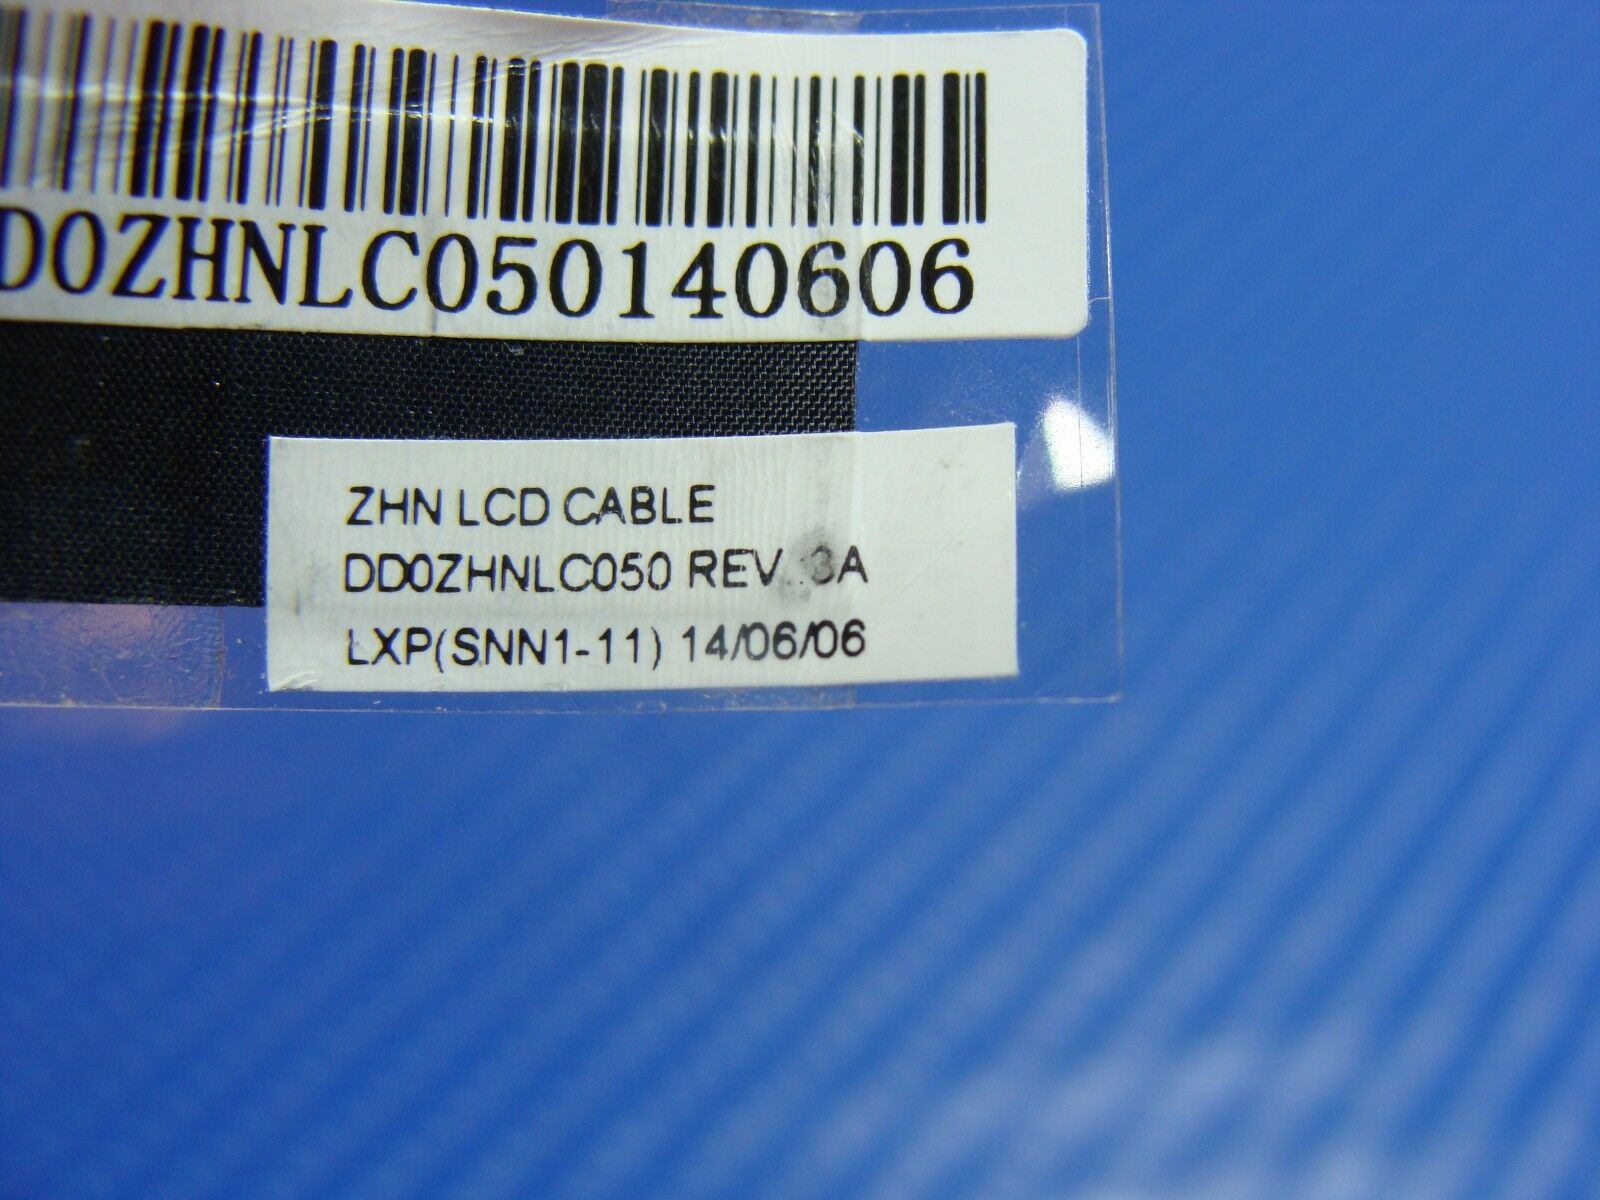 Acer Chromebook C720-2844 11.6